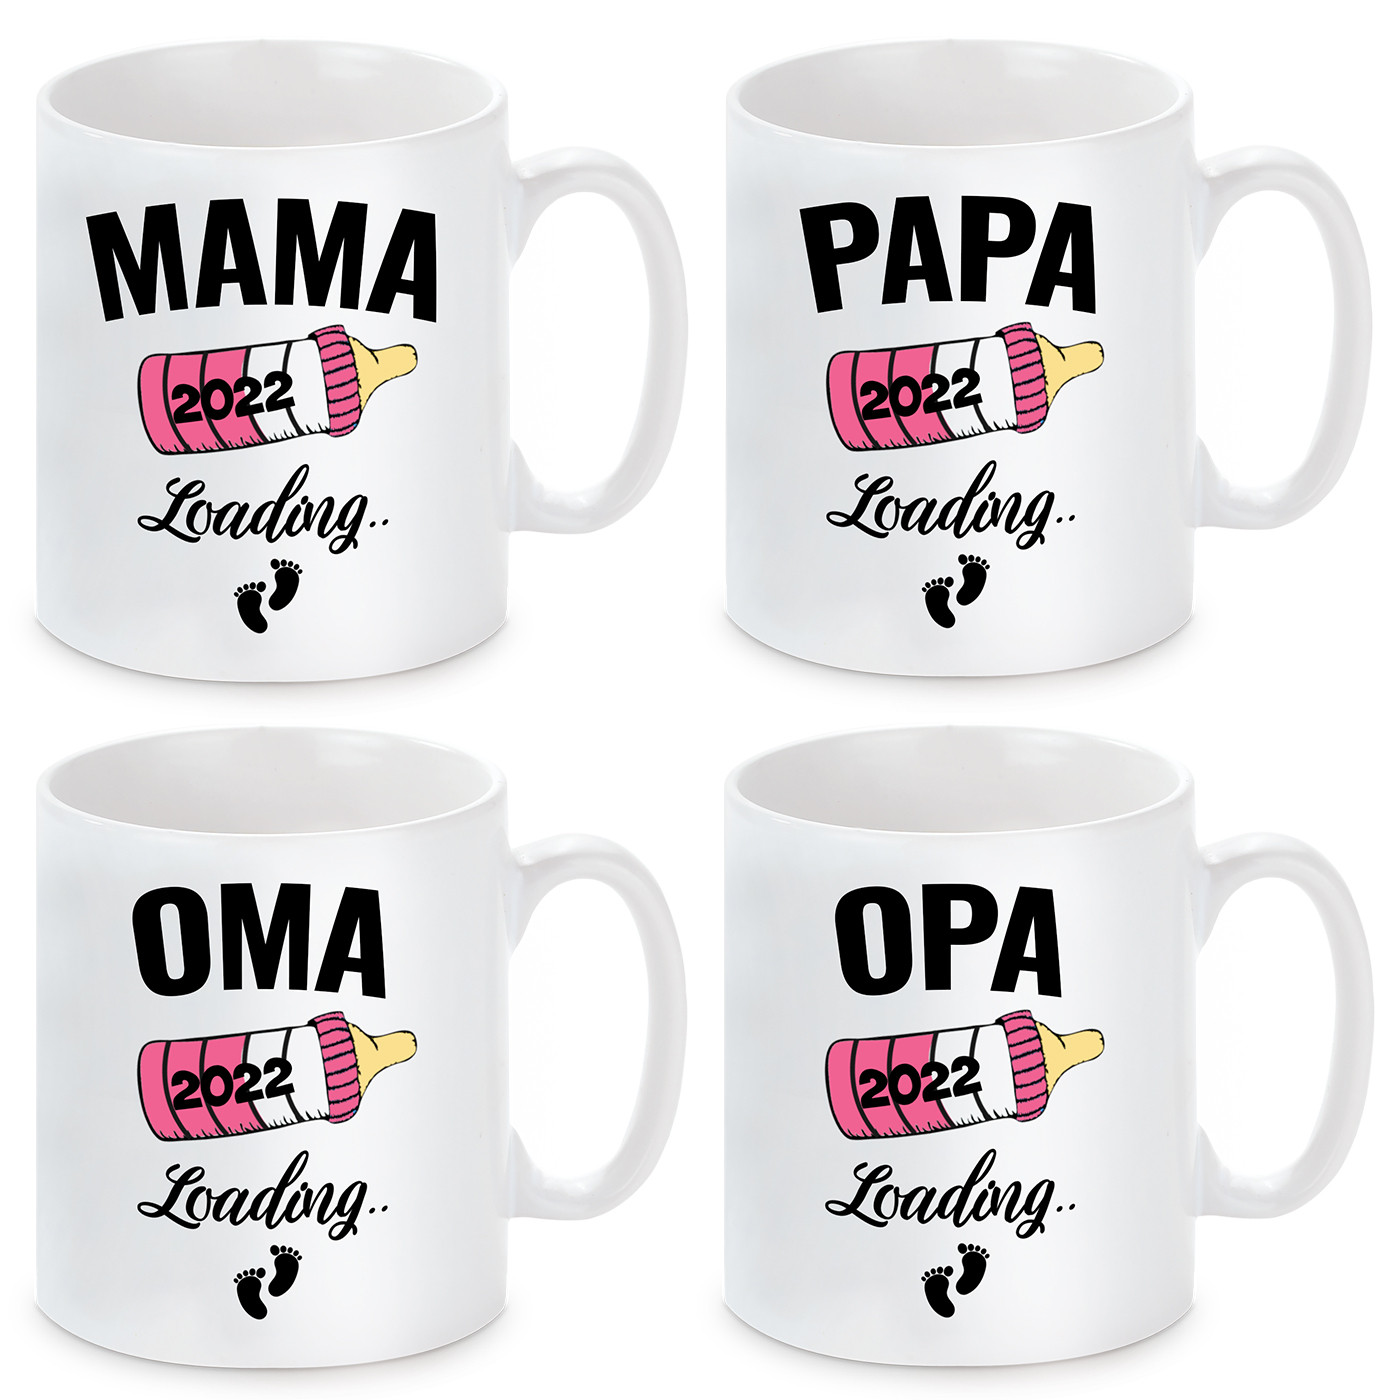 Tasse mit Motiv - Mama/Papa/Oma/Opa 2022 loading